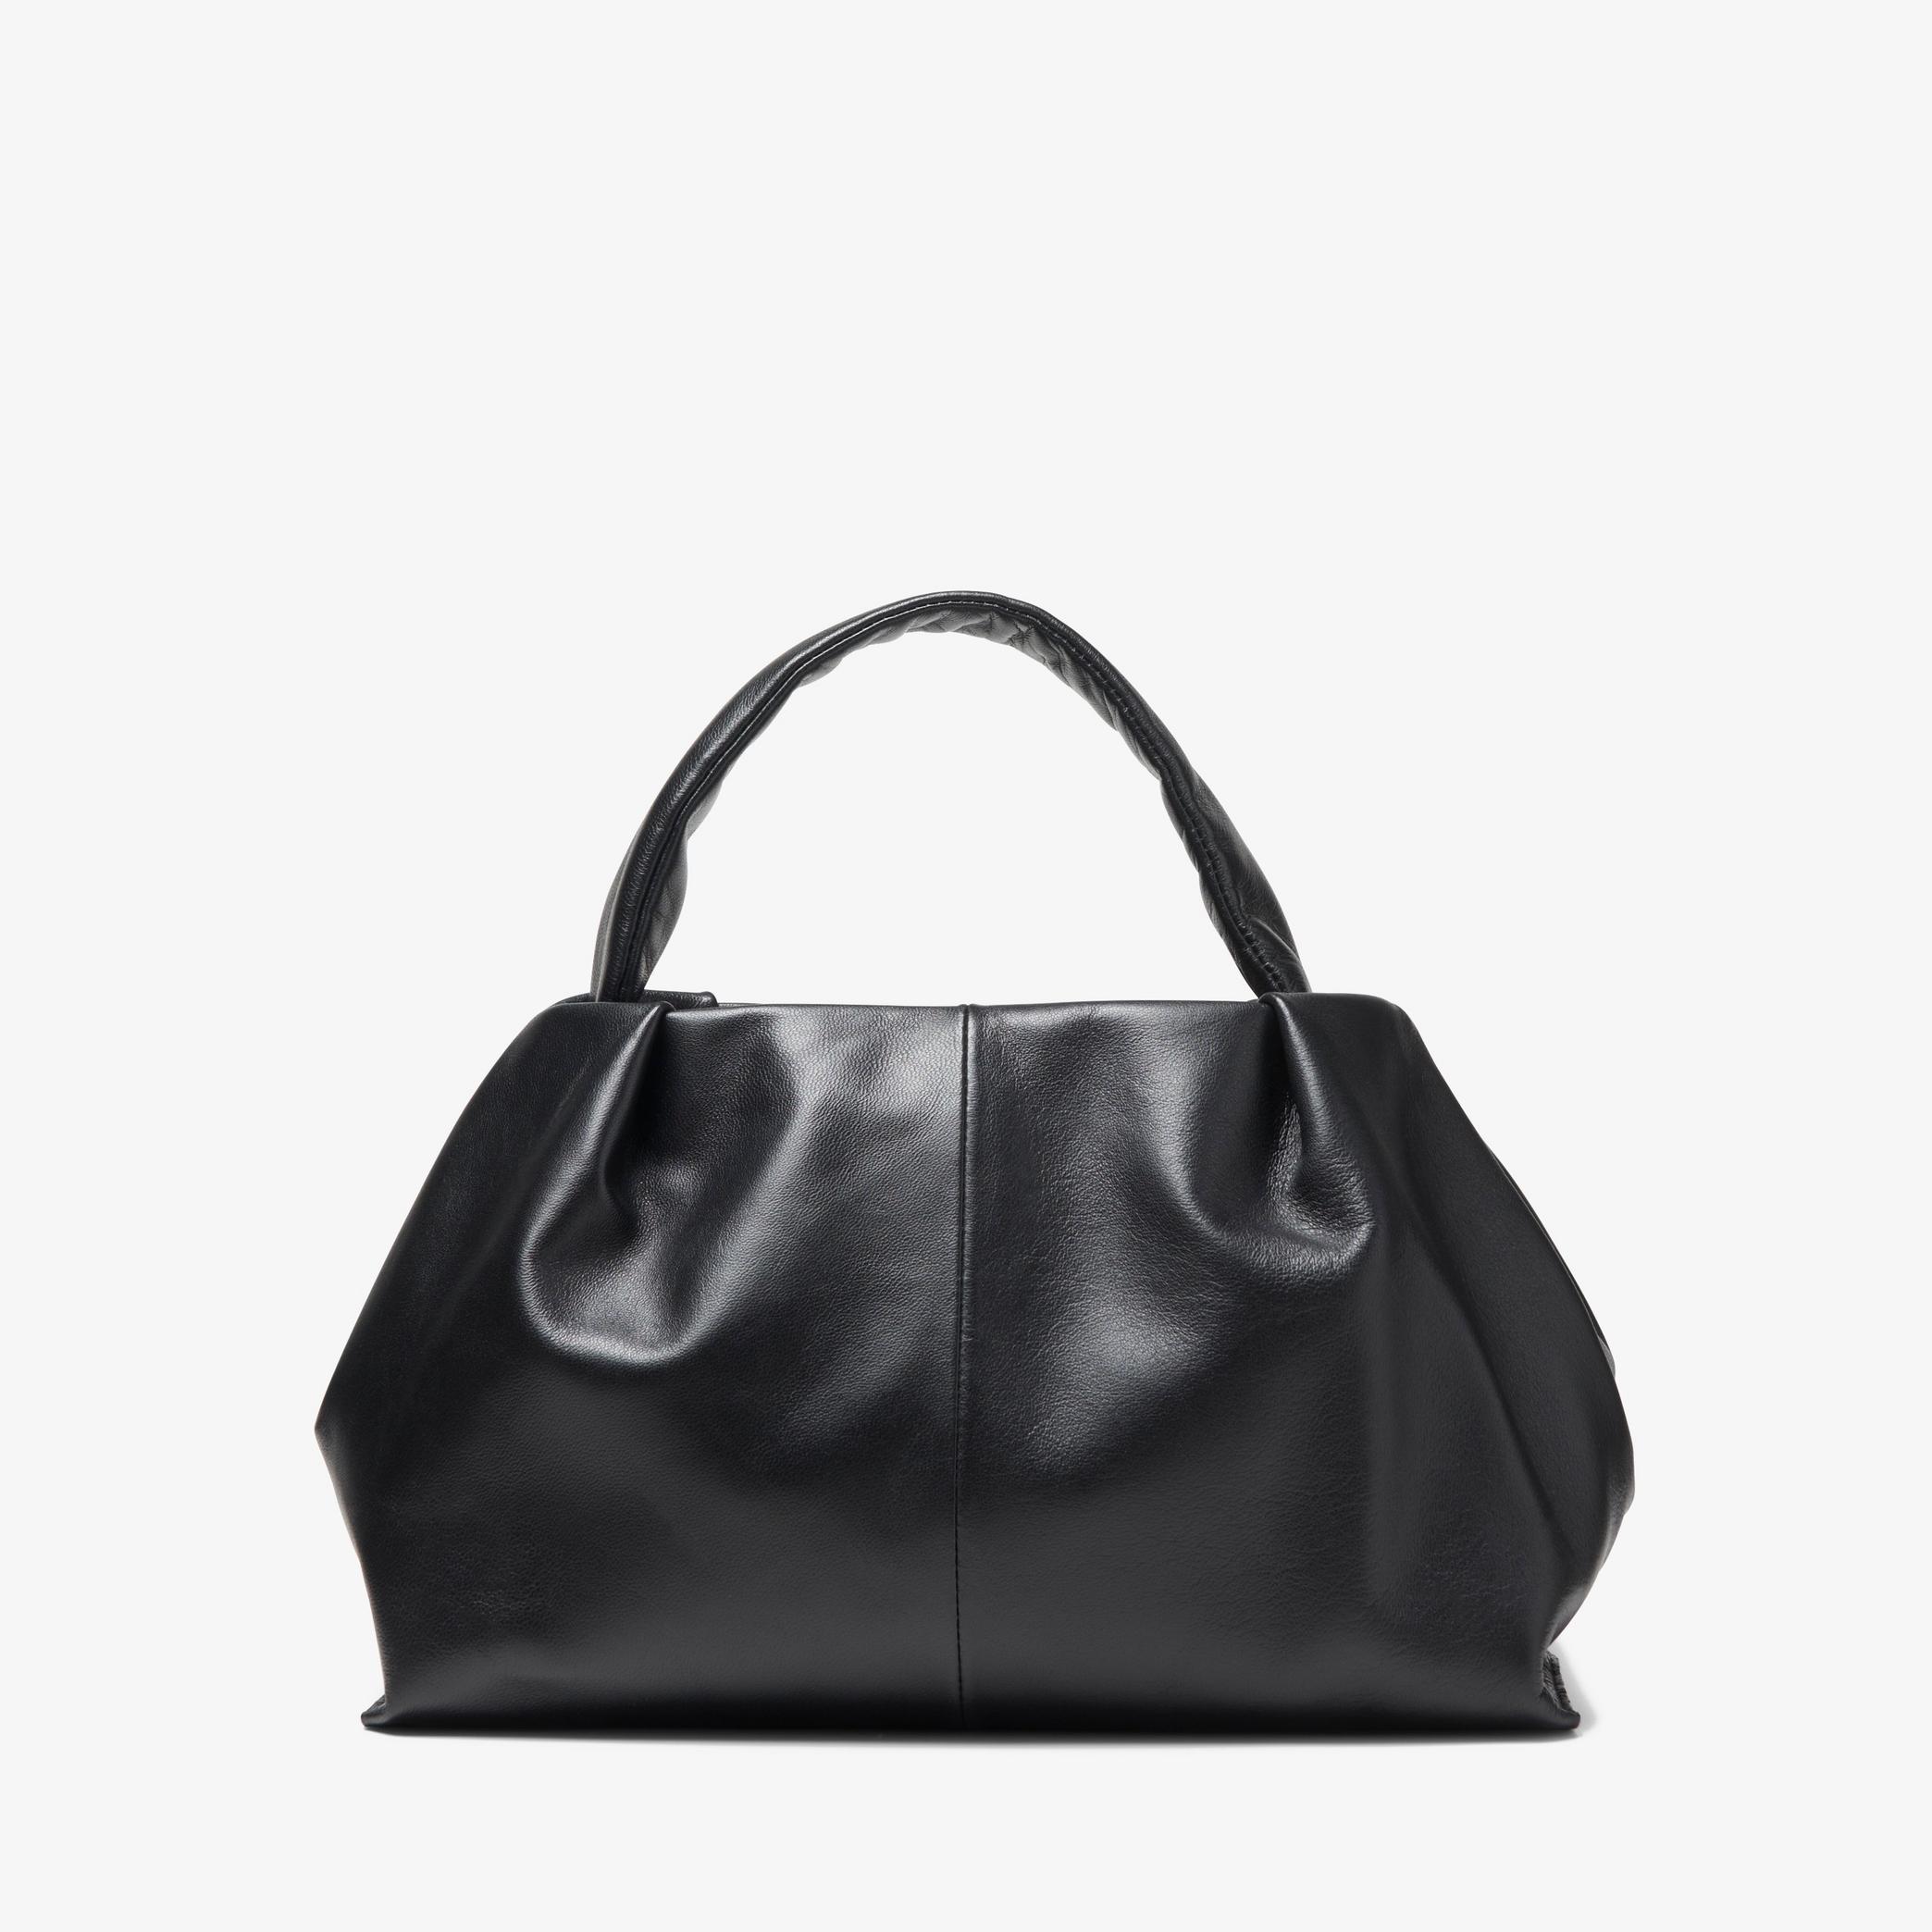 Raelyn Cross Black Leather Across Body Bag, view 2 of 4